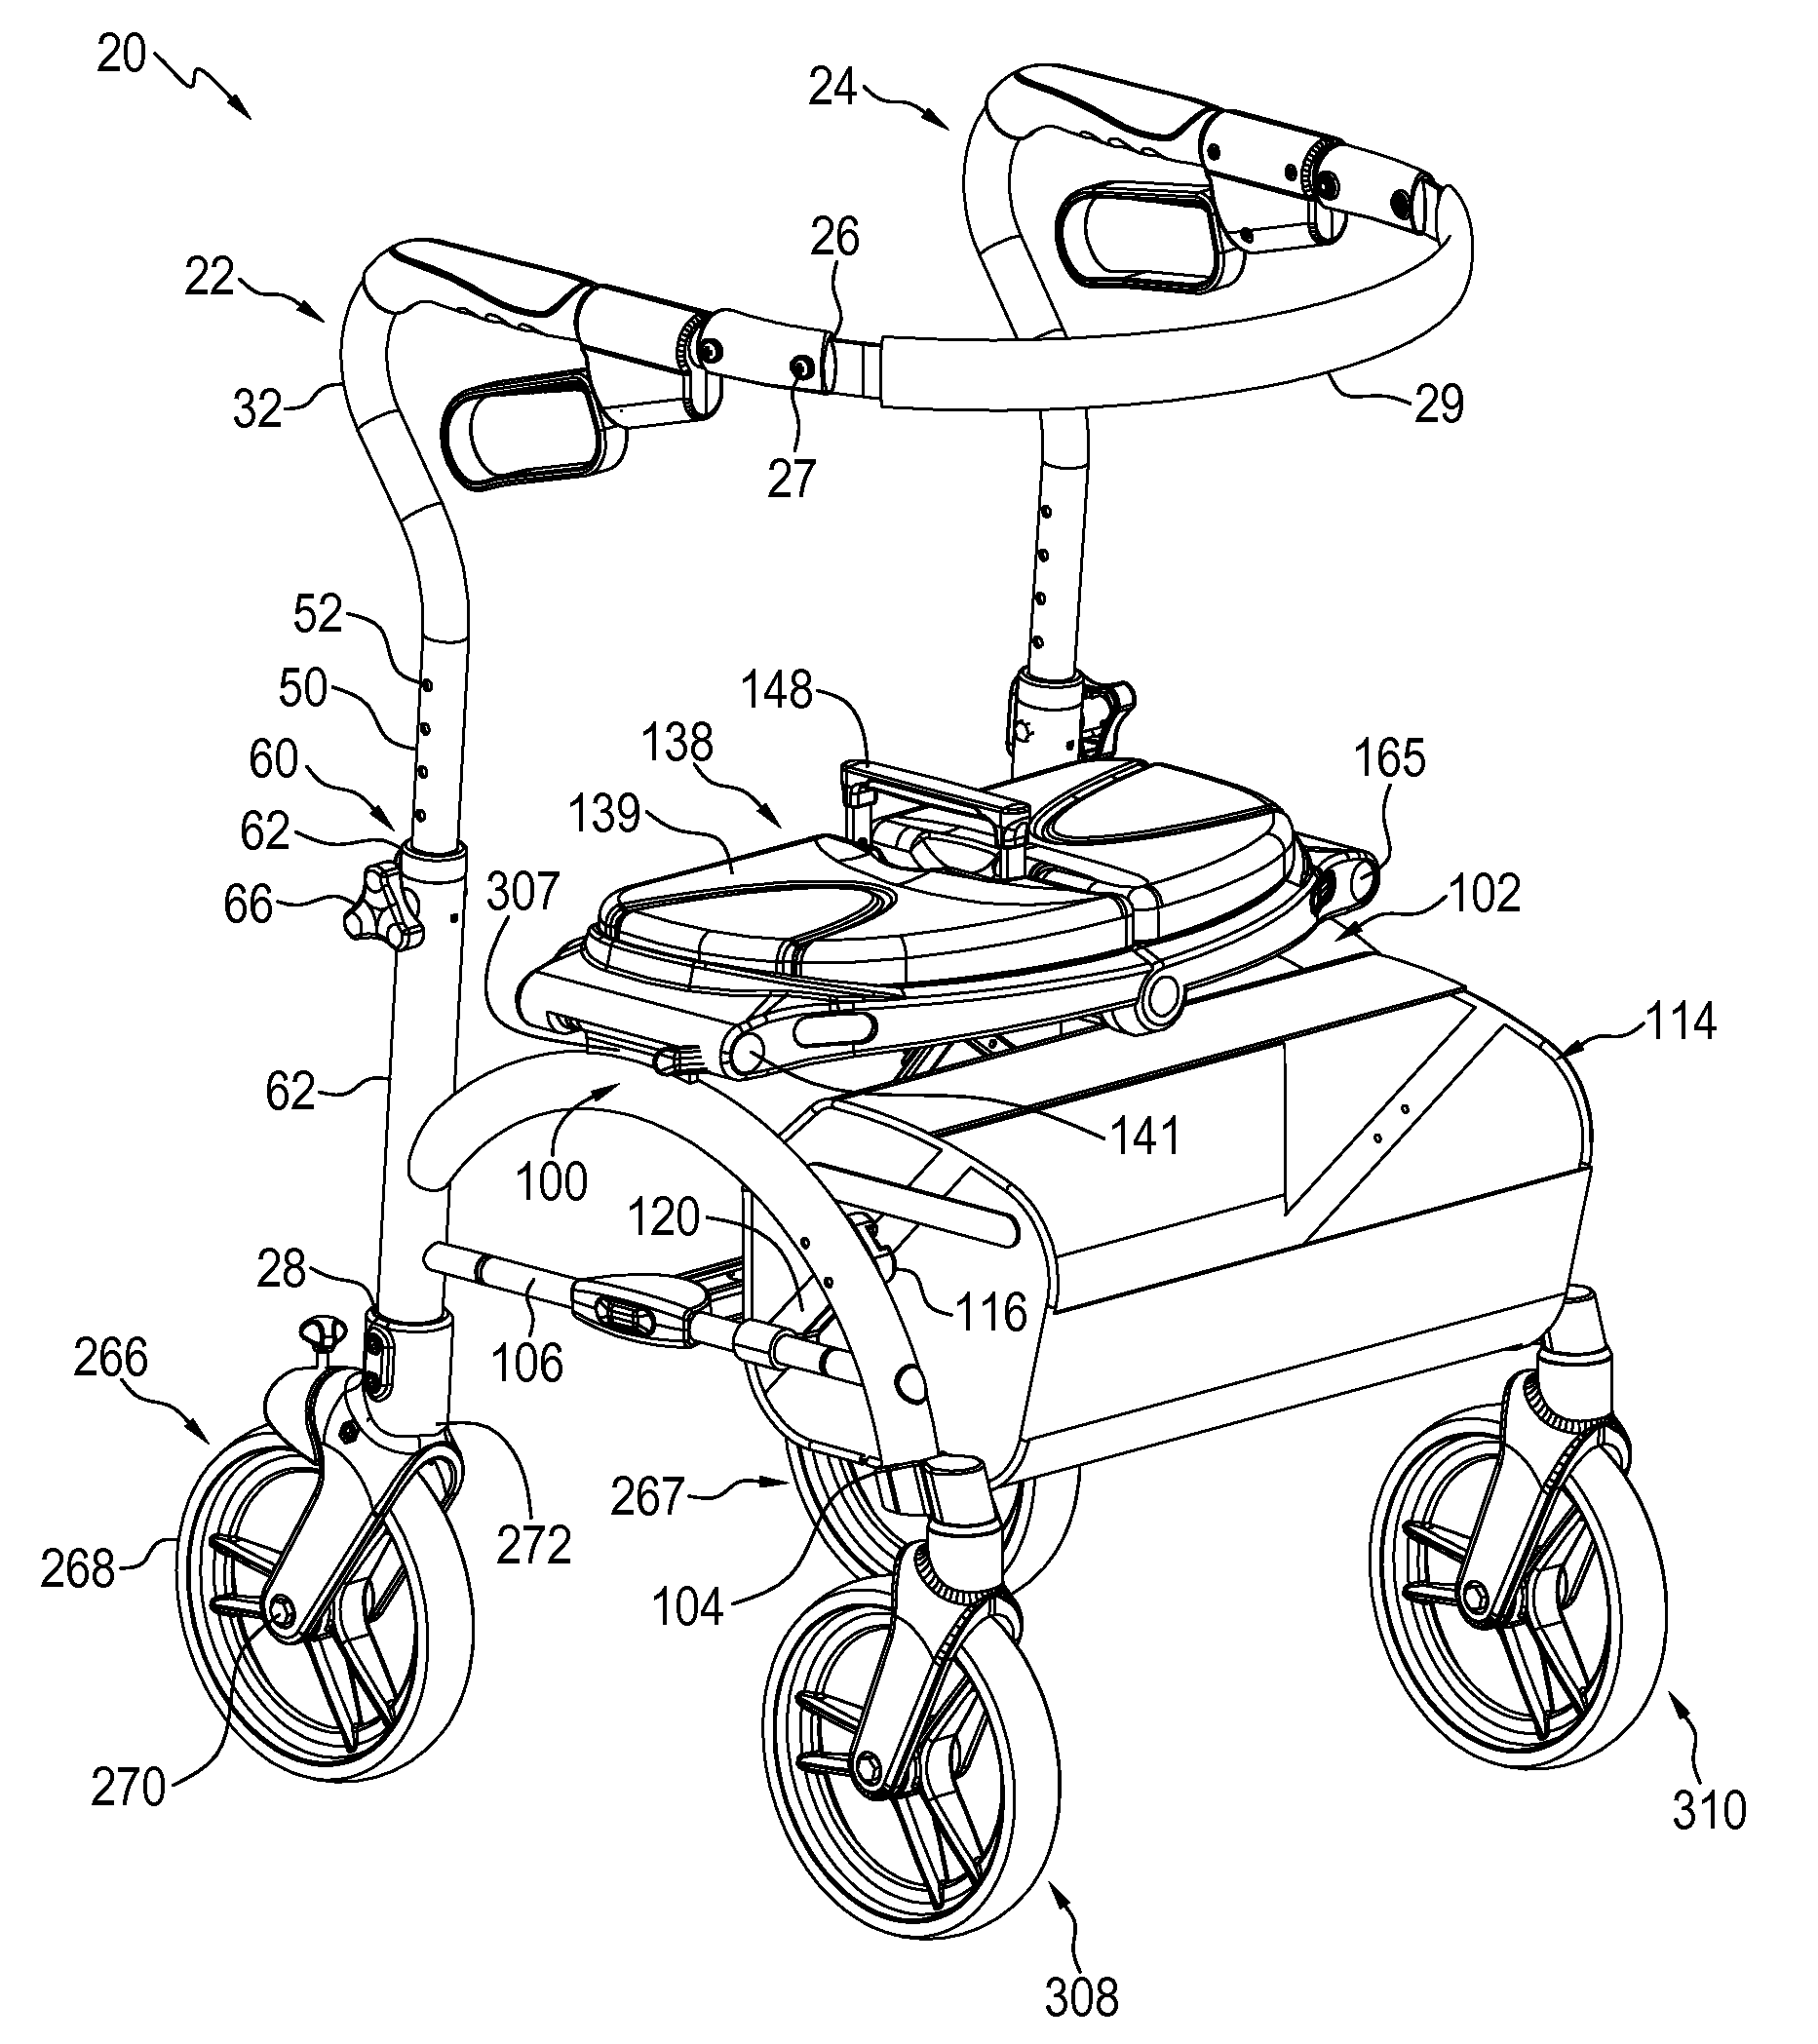 Foldable walker apparatus